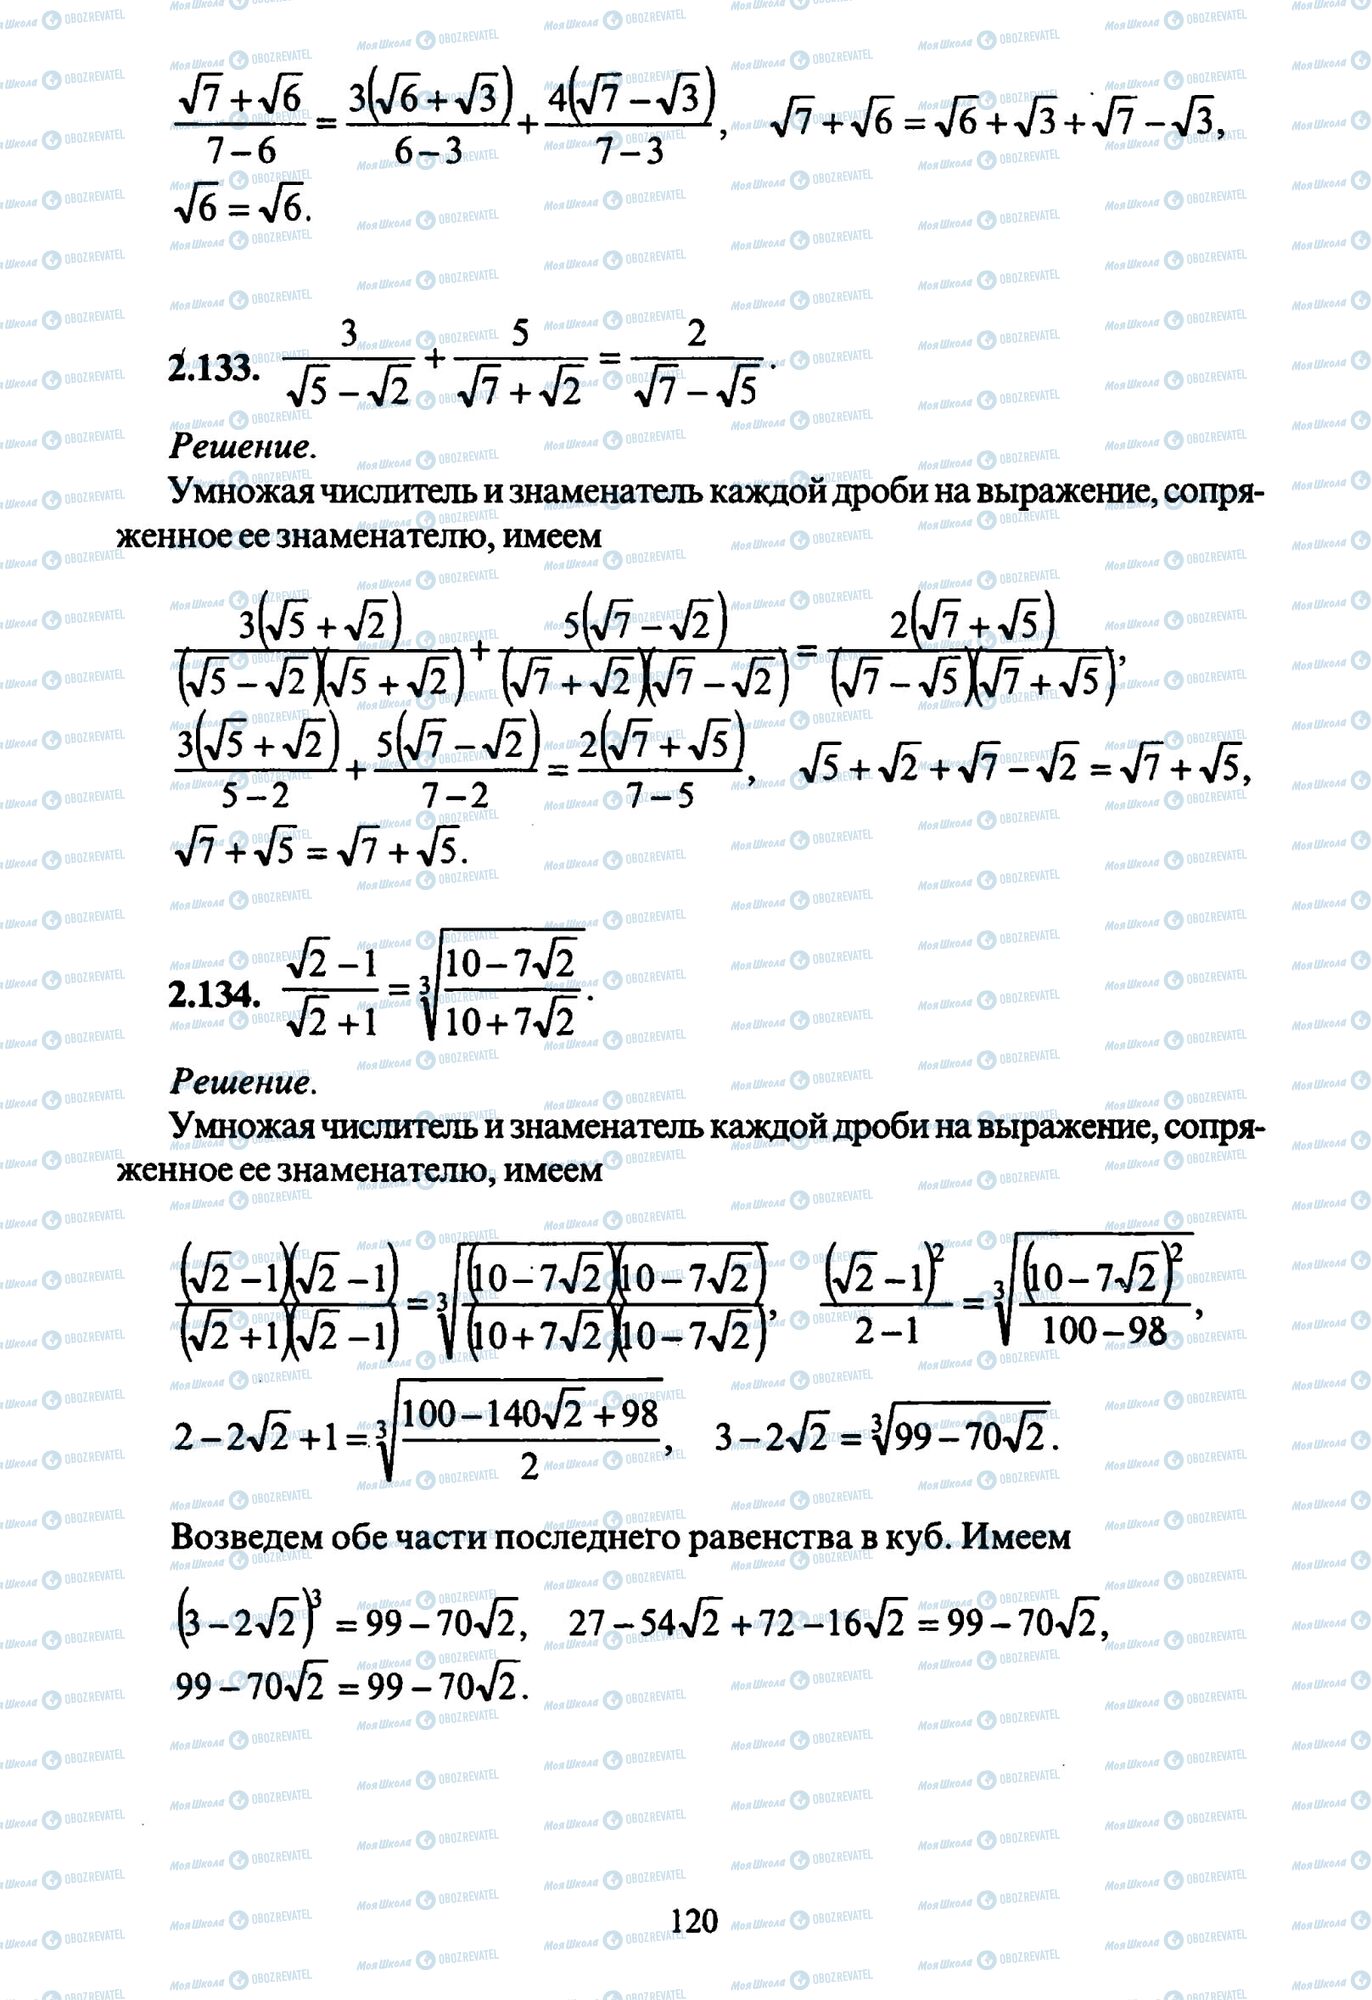 ЗНО Математика 11 класс страница 133-134